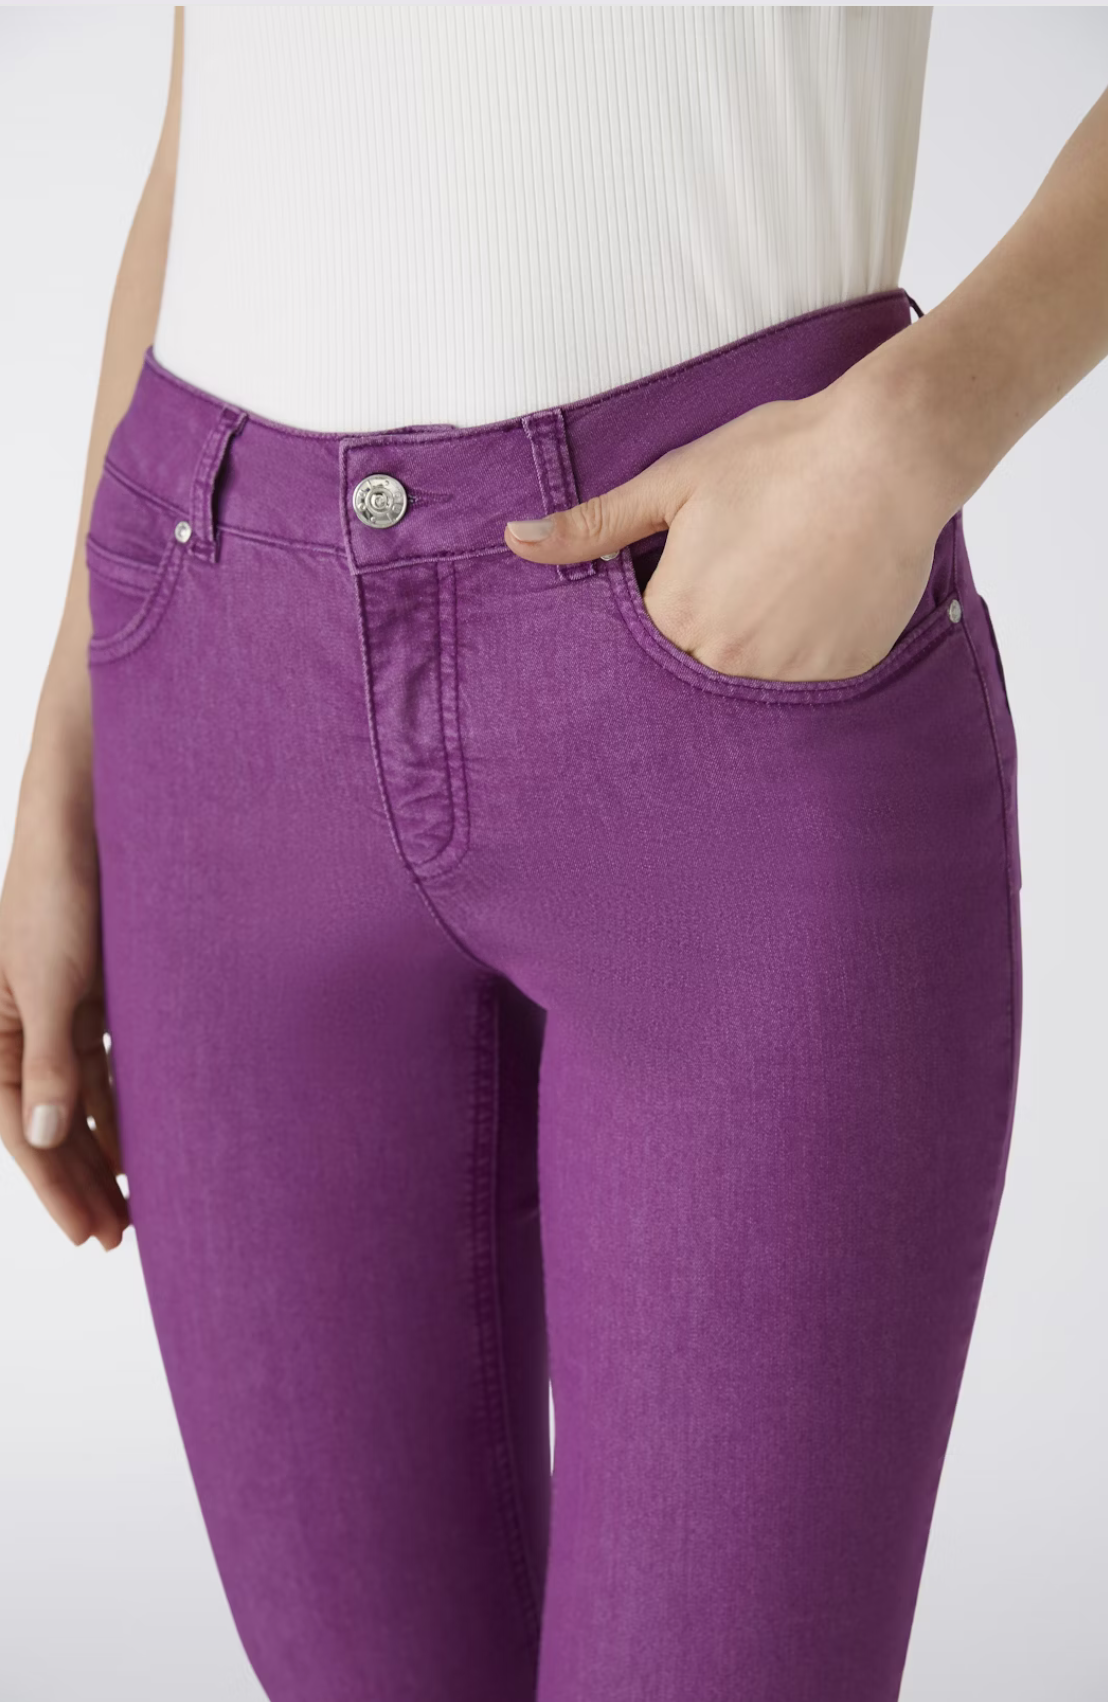 Oui - Baxtor Cropped Trouser in Grape